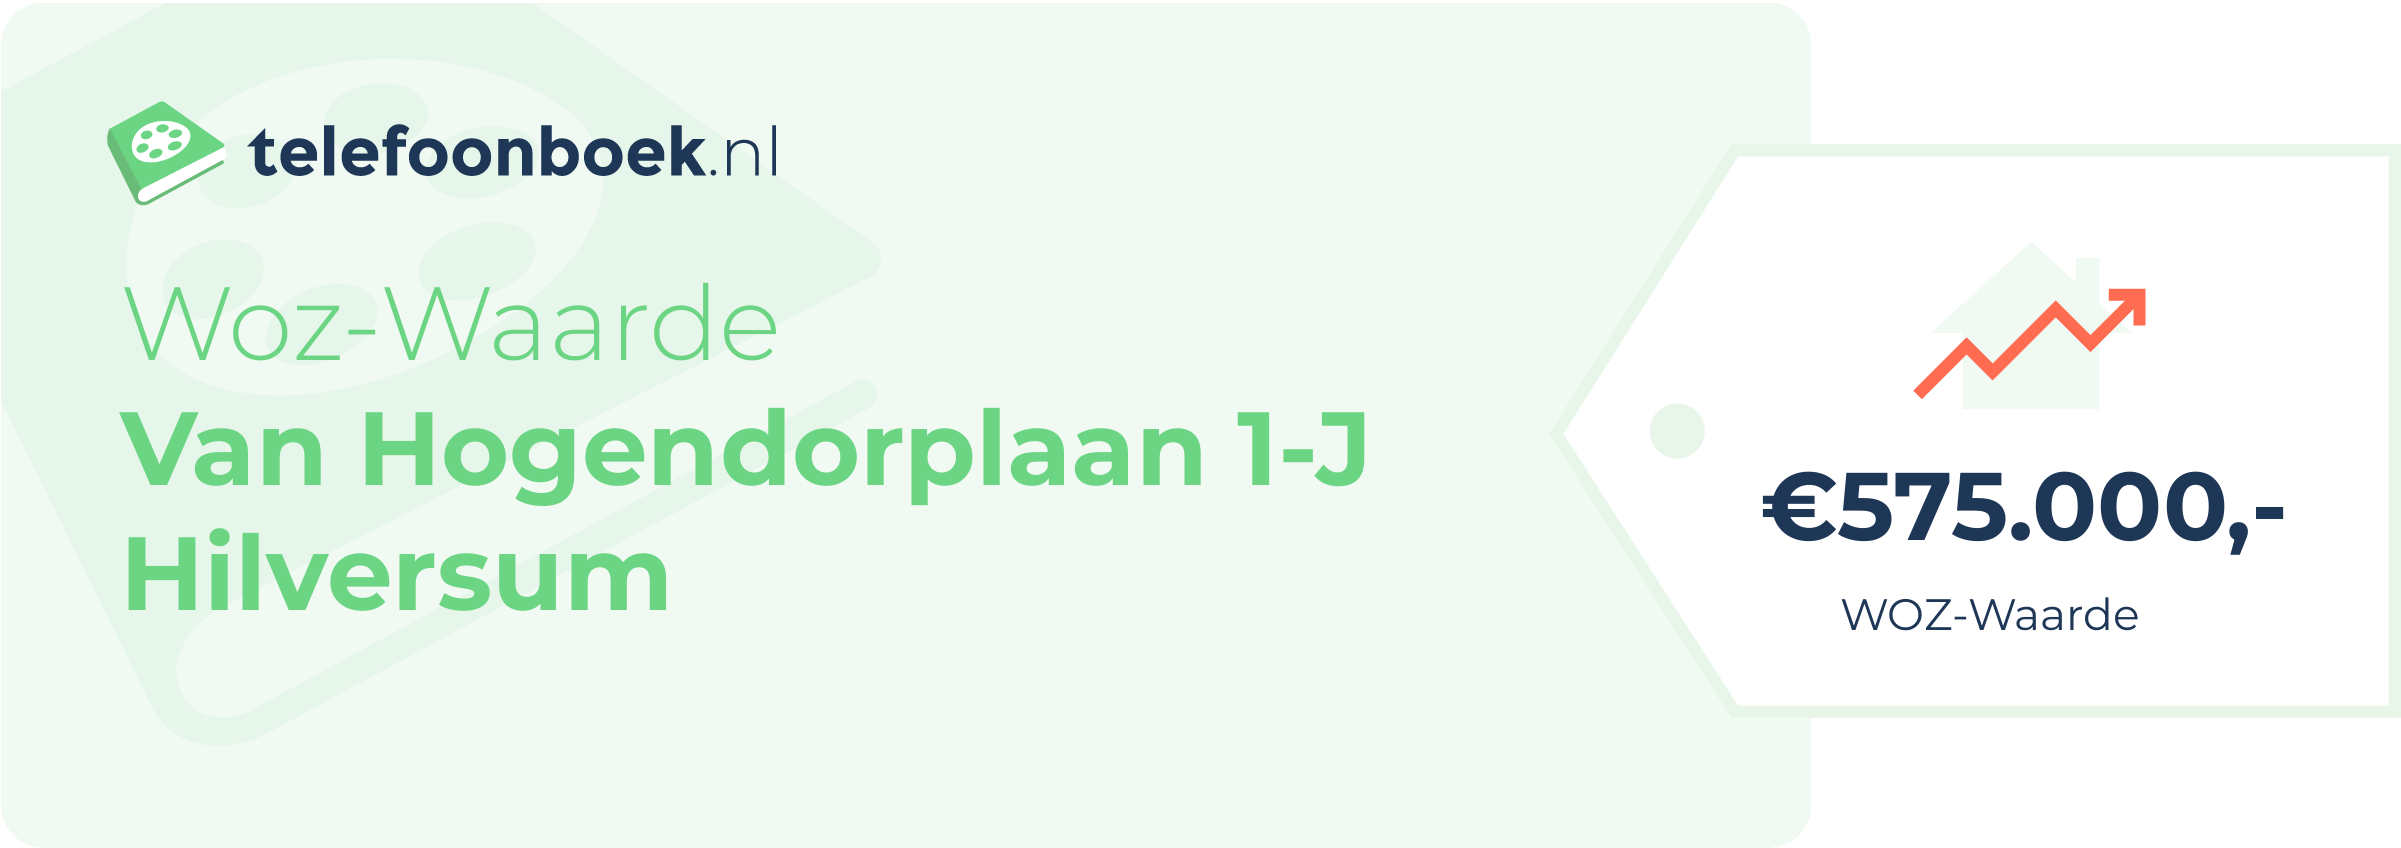 WOZ-waarde Van Hogendorplaan 1-J Hilversum